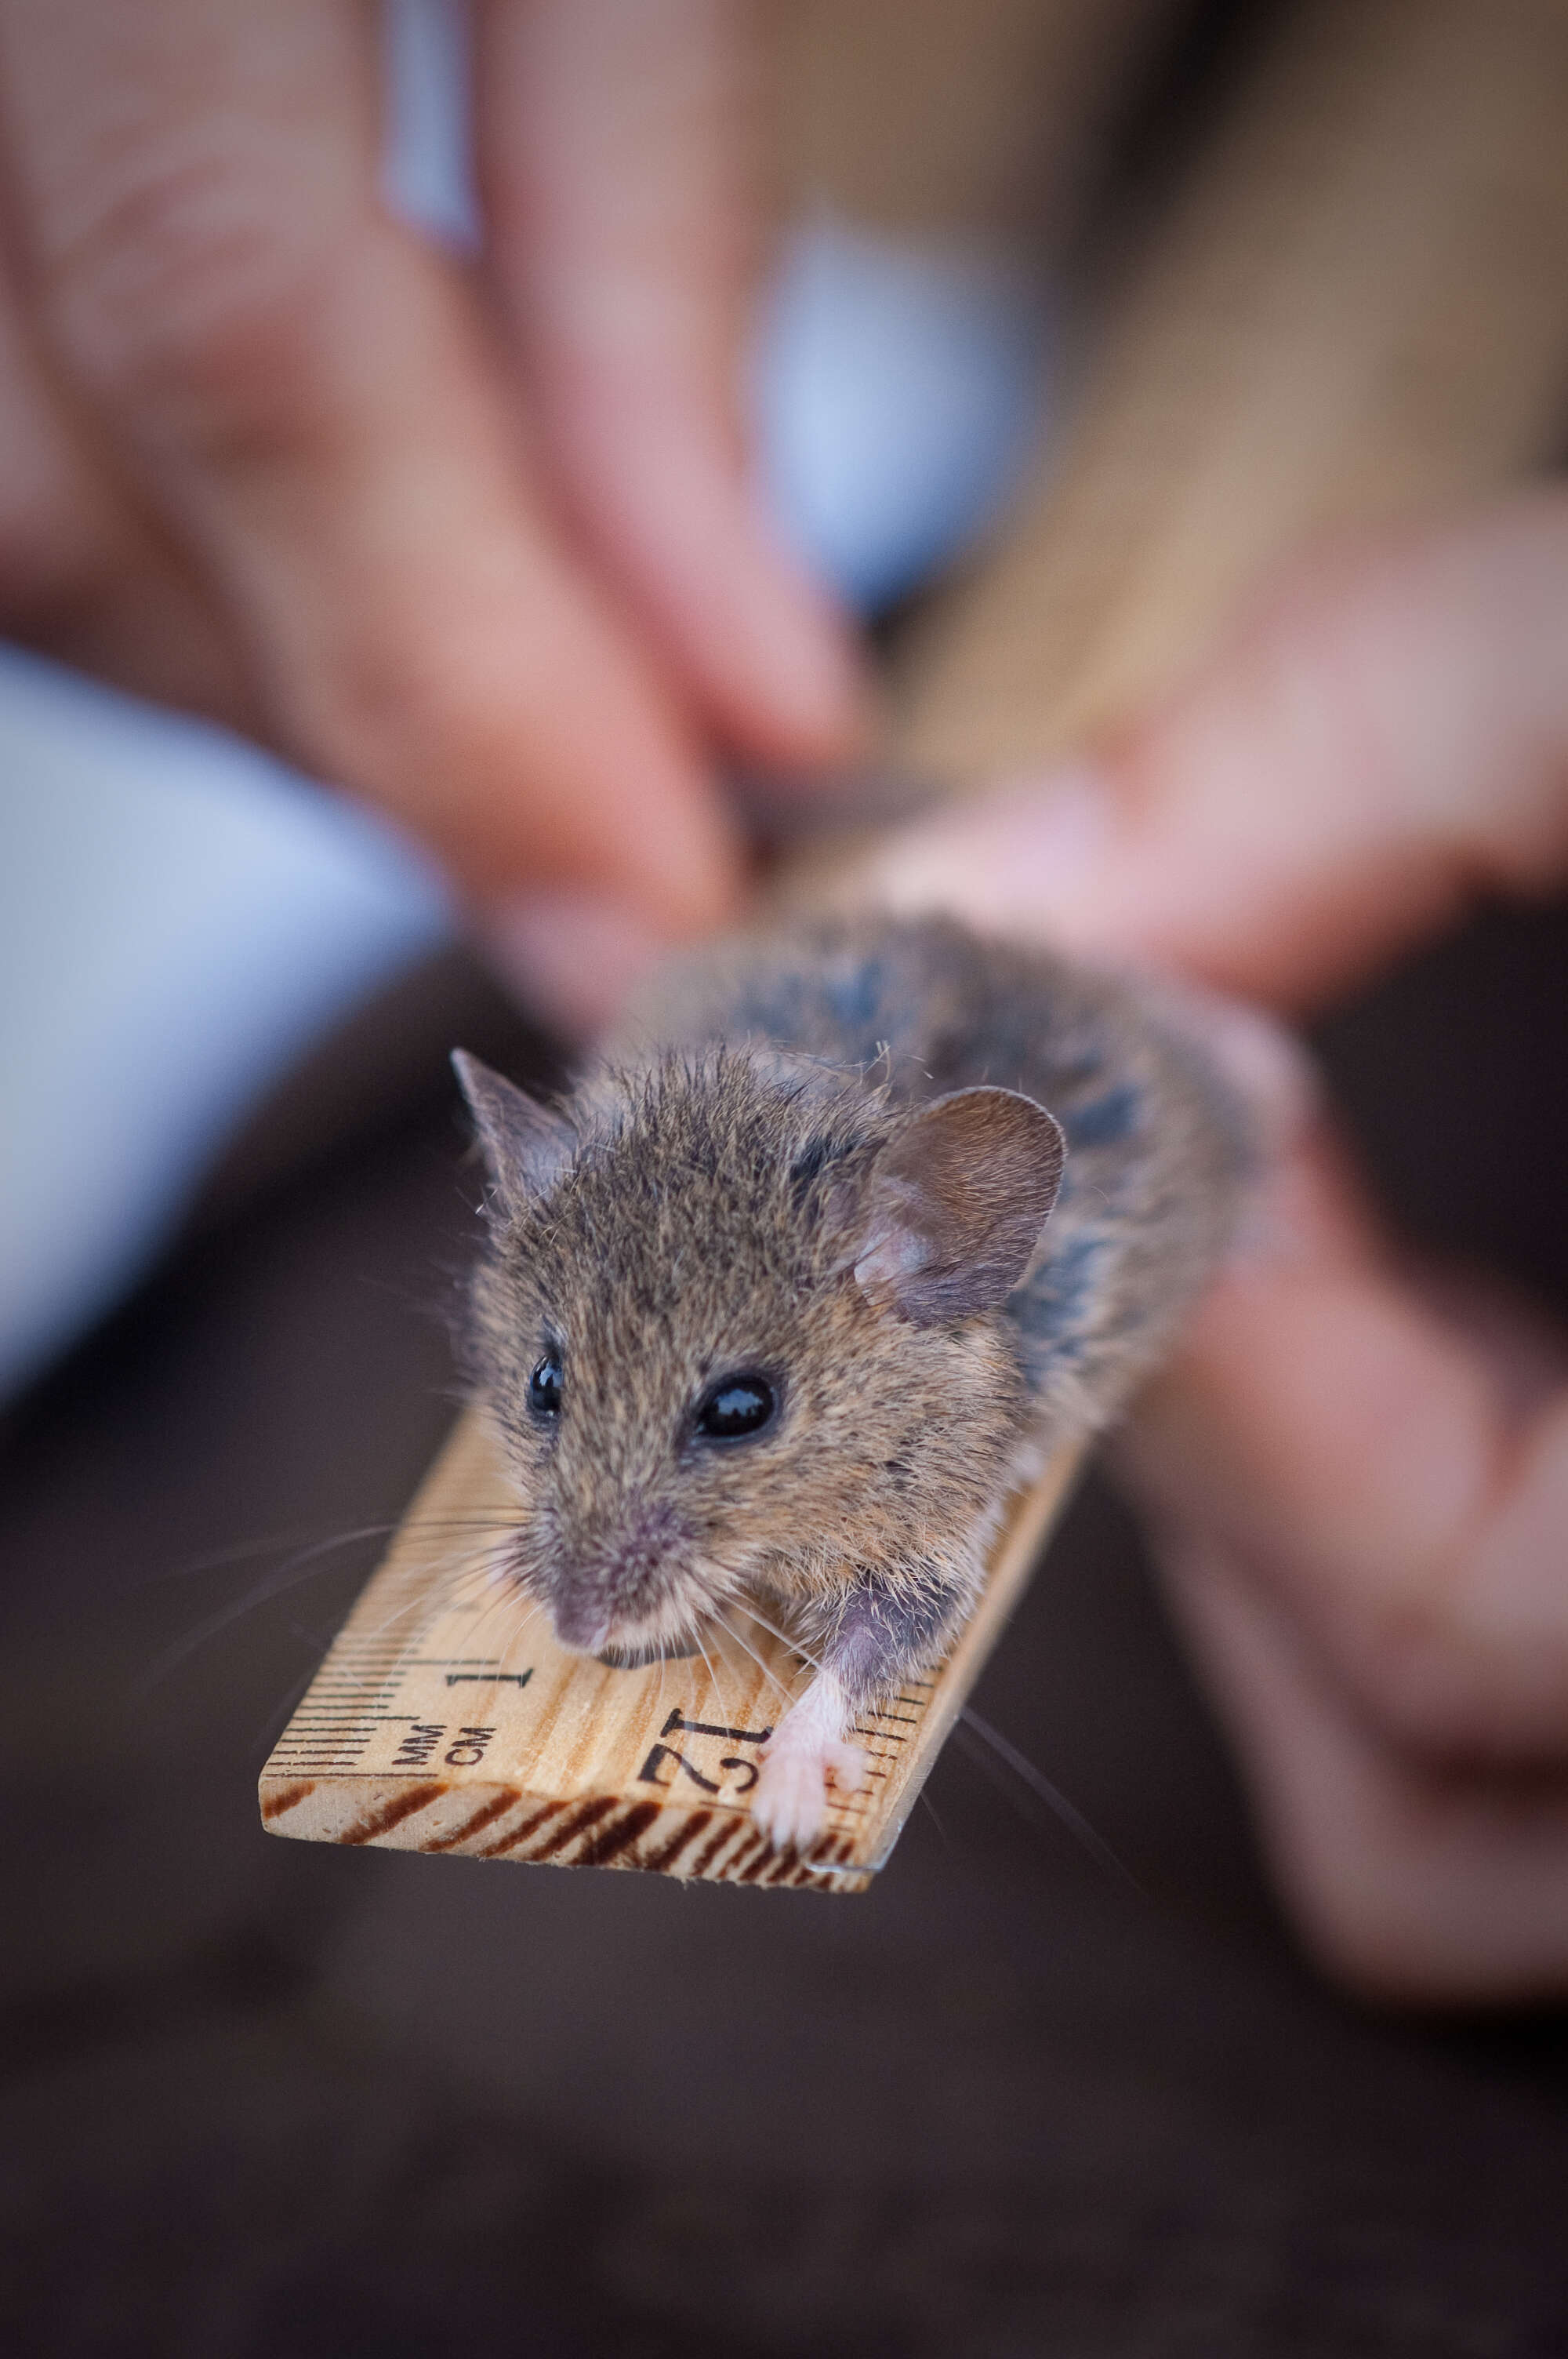 Image of Salt-marsh Harvest Mouse